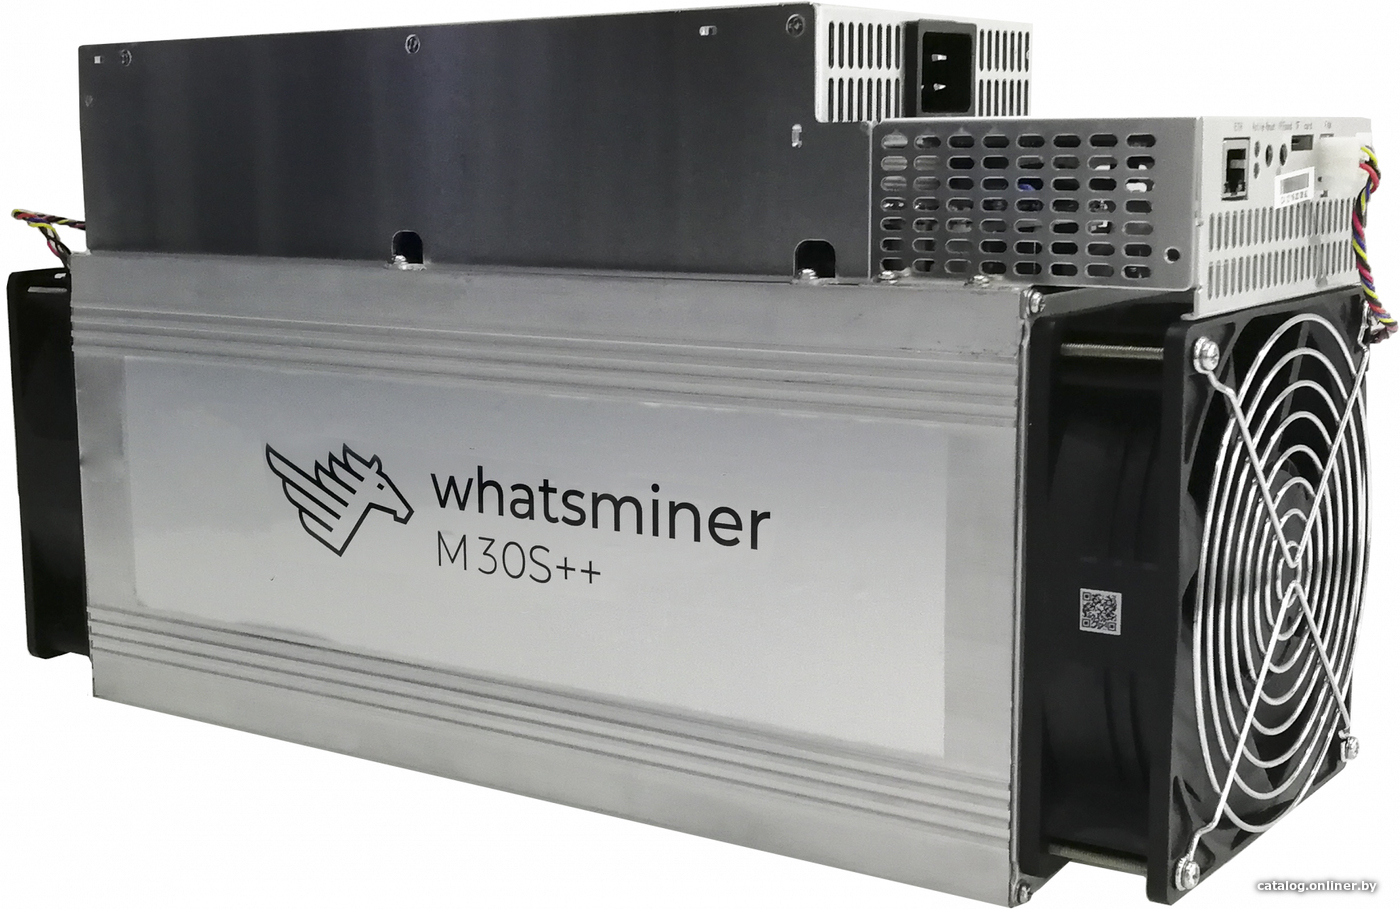 

Whatsminer M30S++ 110T